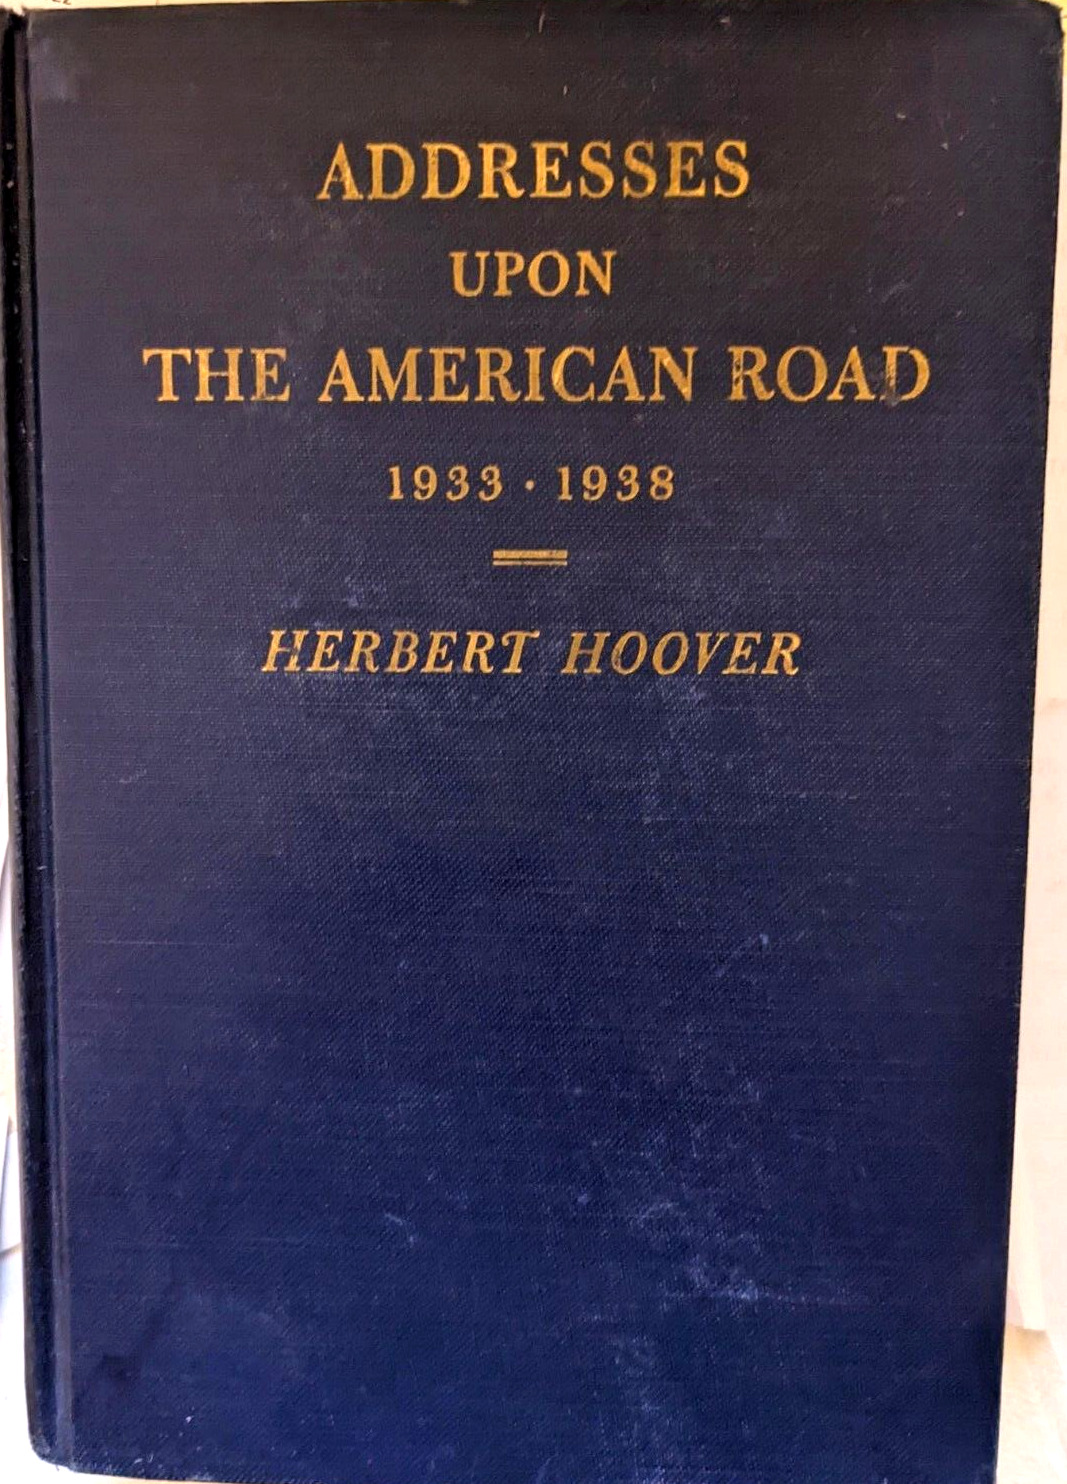 ADDRESSES UPON THE AMERICAN ROAD 1933 - 1938, Herbert Hoover, 1st Ed. 1938, GC